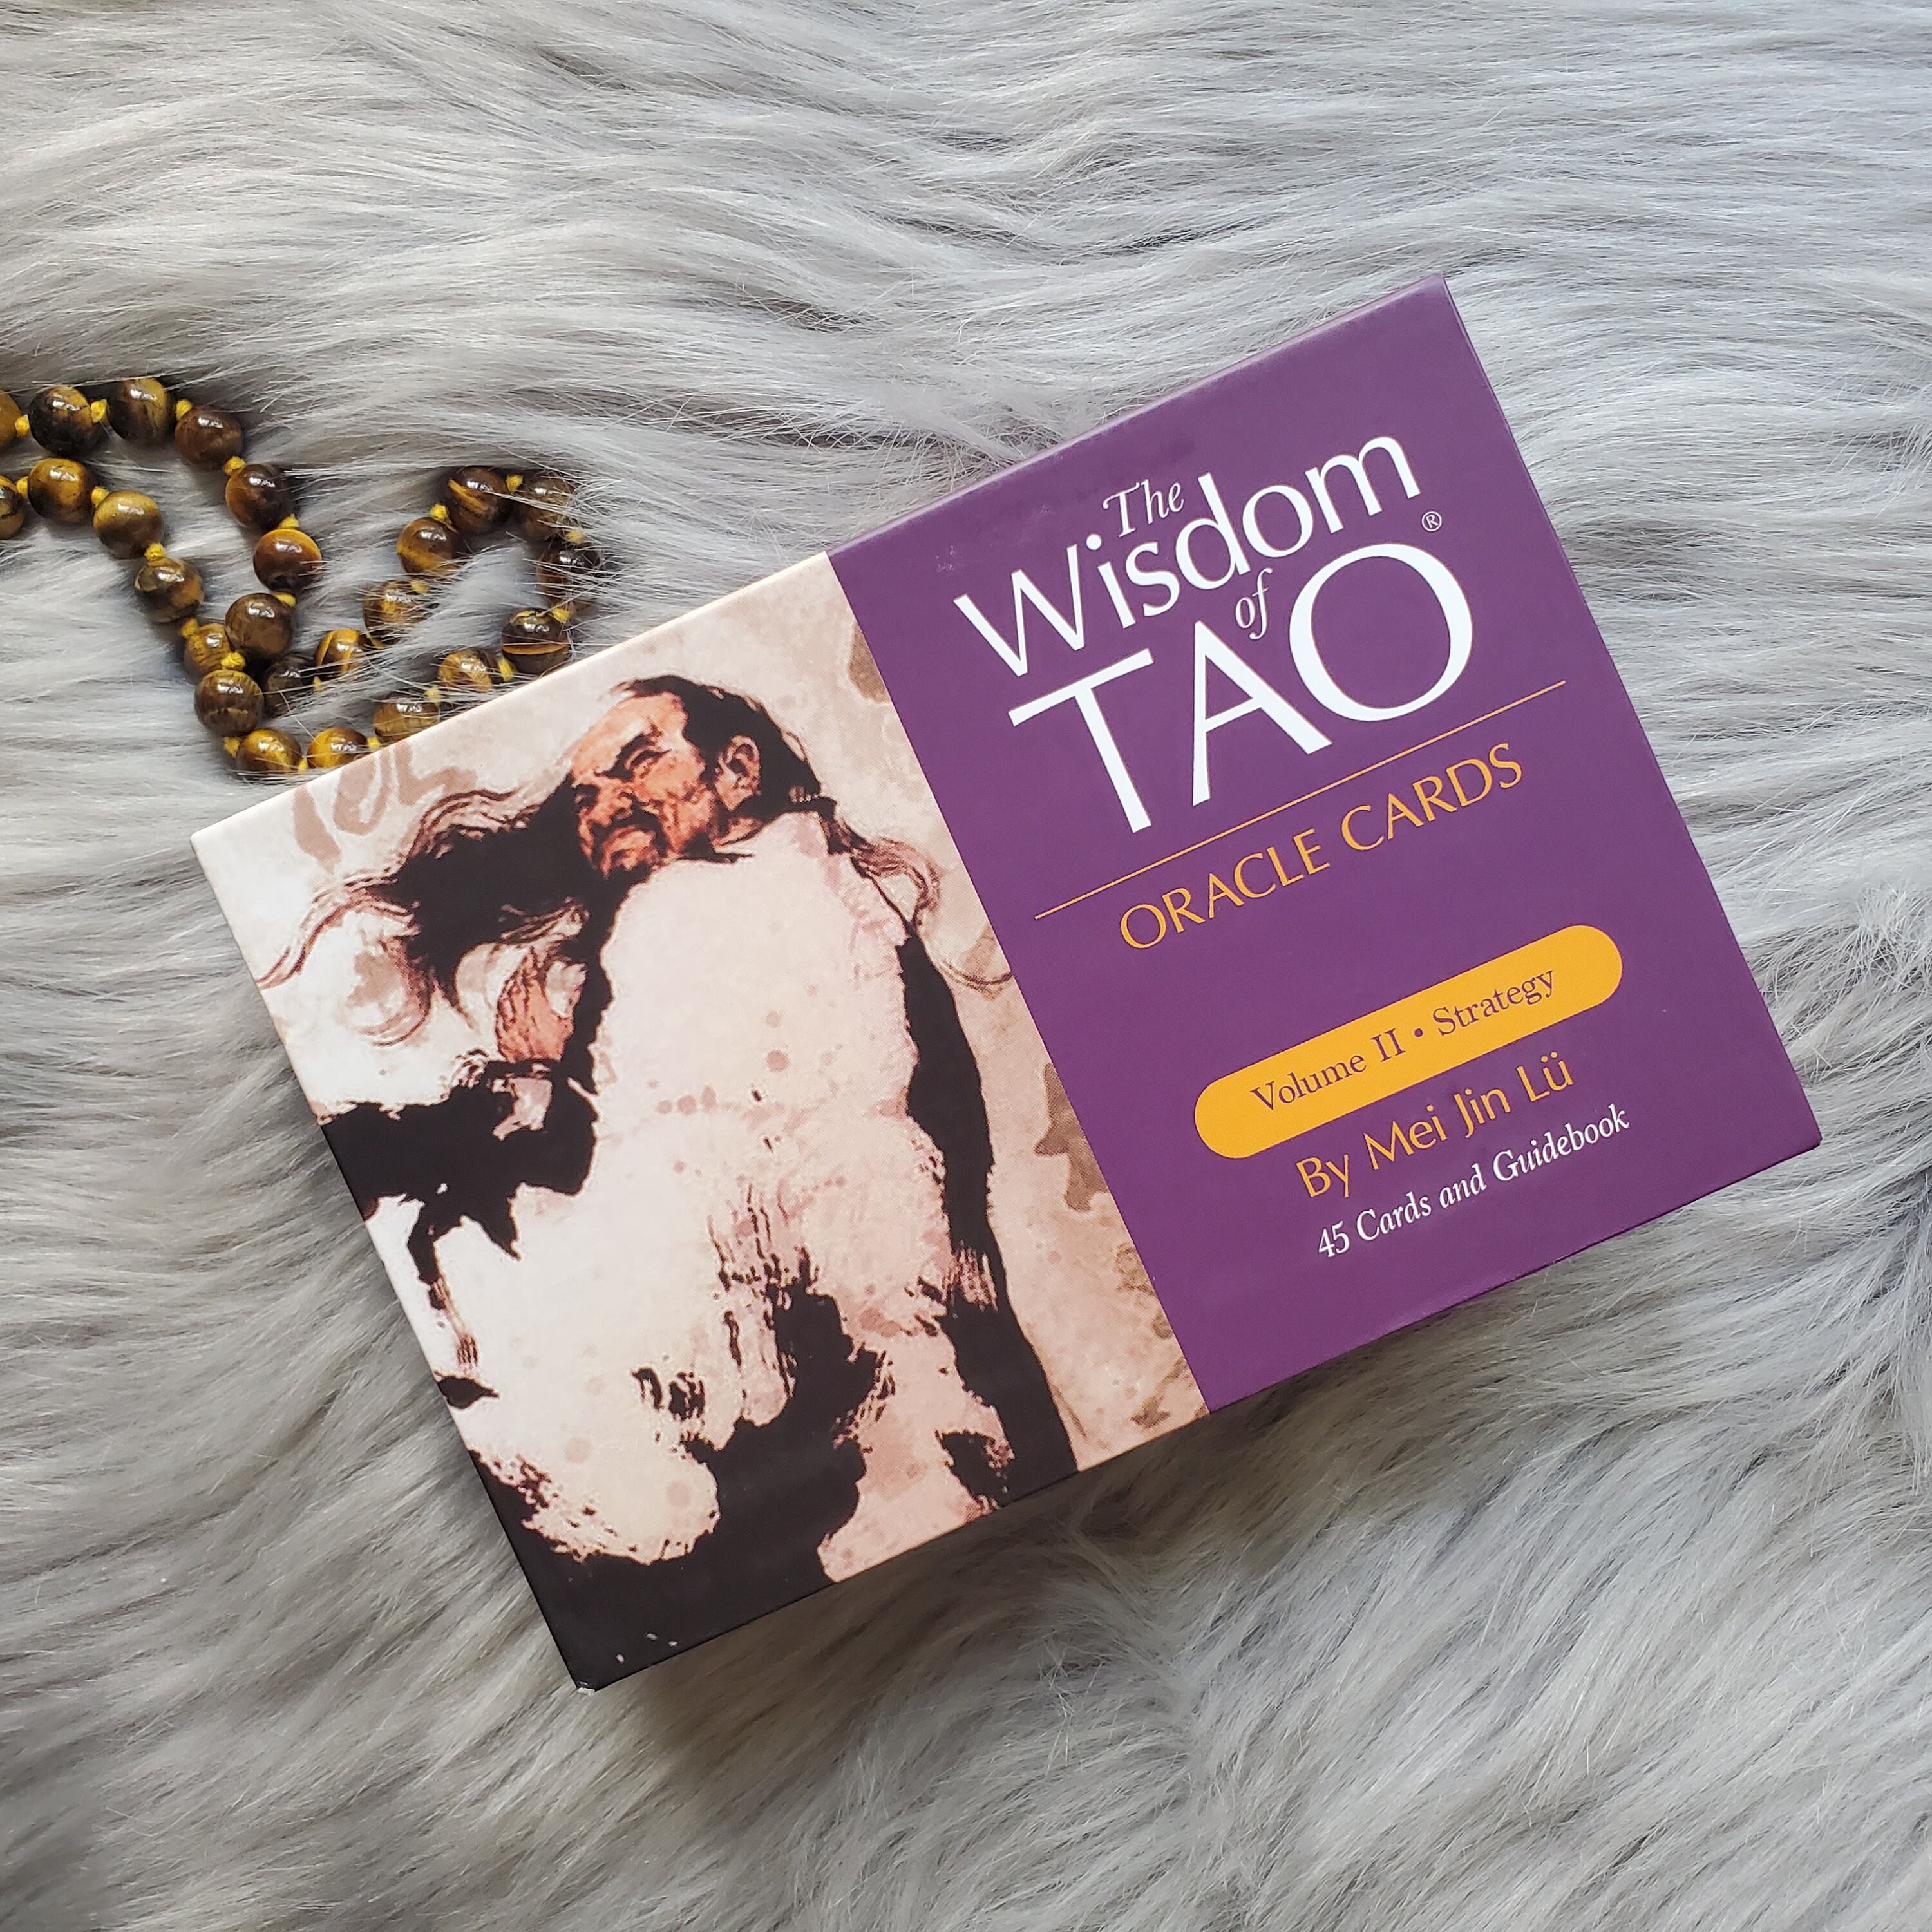 Purple Moon - The Wisdom of Tao Oracle Cards Volume II • Strat